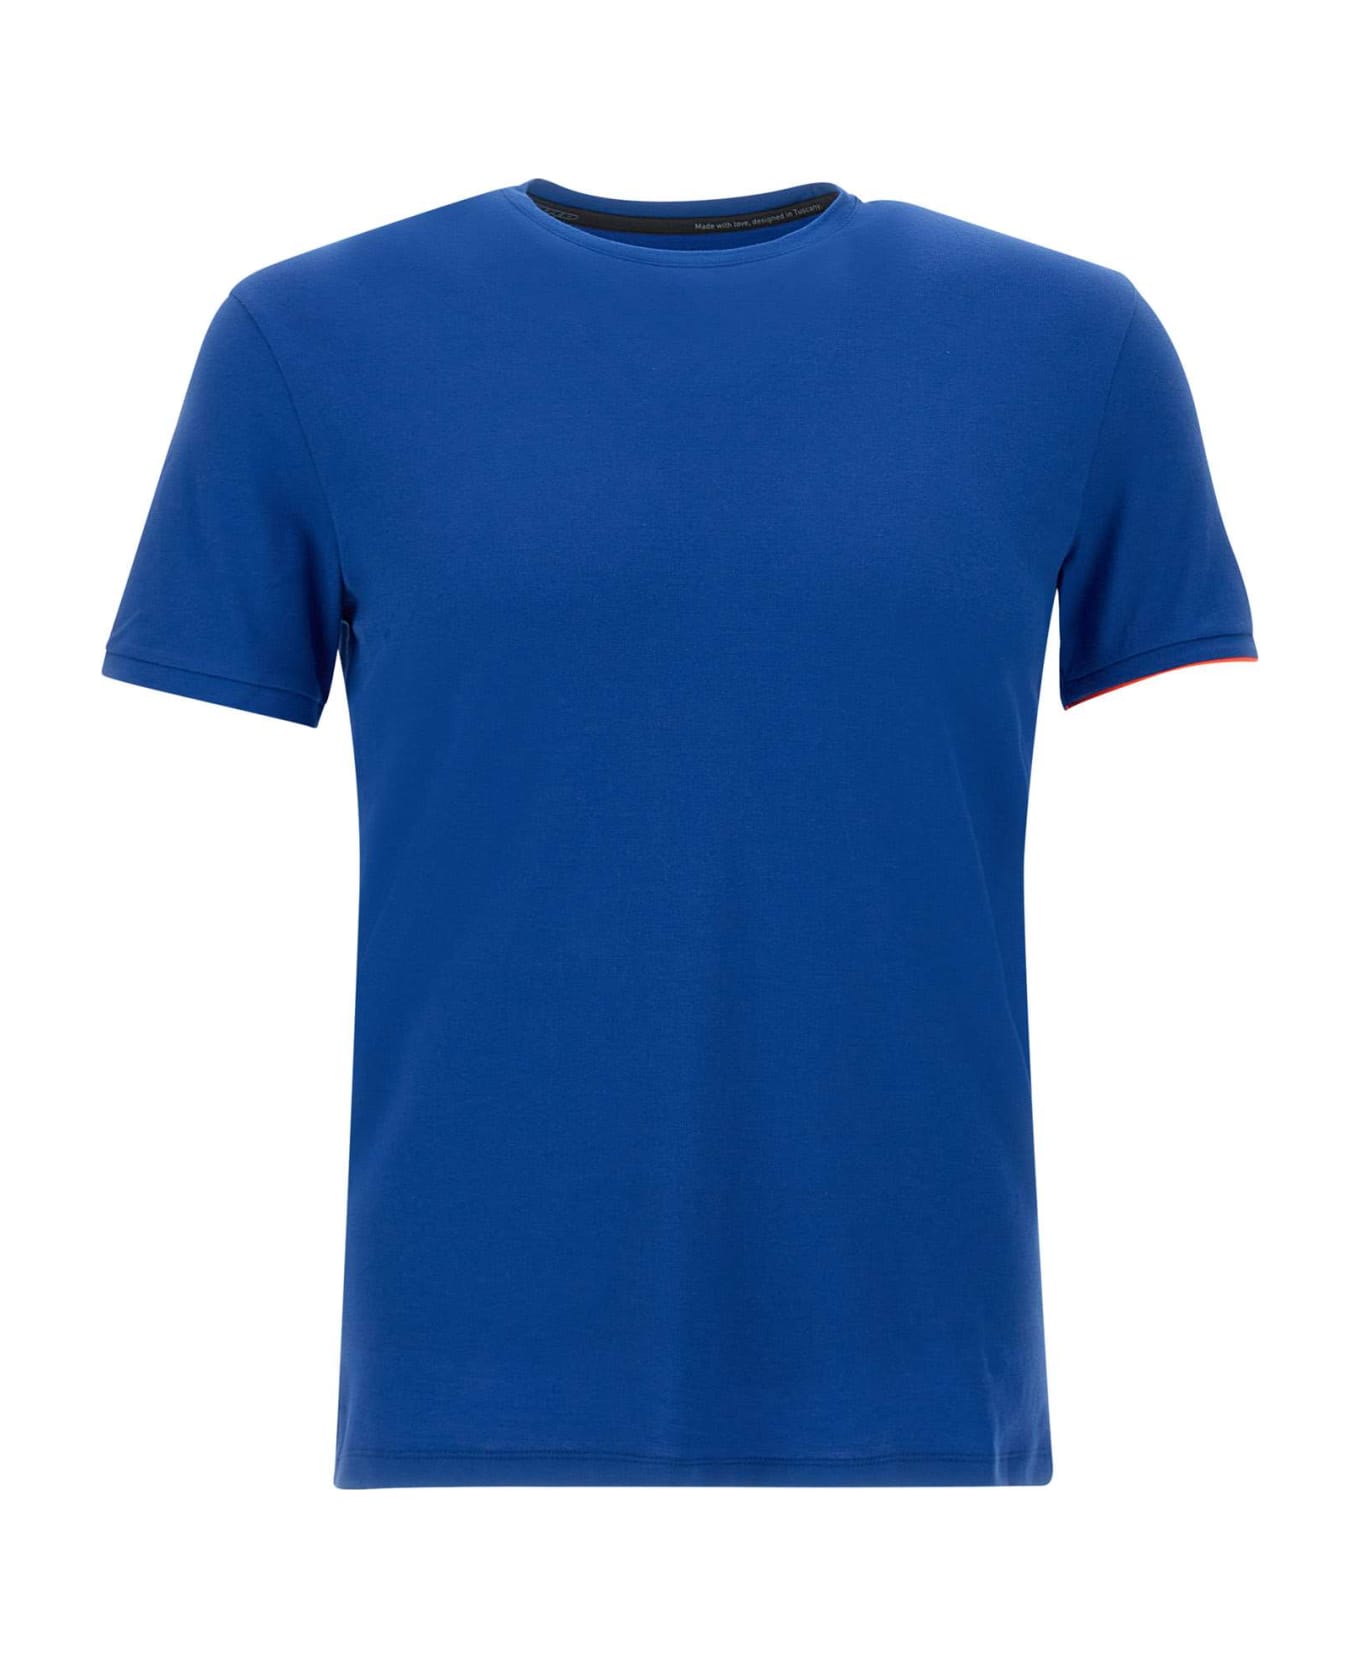 RRD - Roberto Ricci Design 'shirty Macro' T-shirt - Blu New Royal シャツ